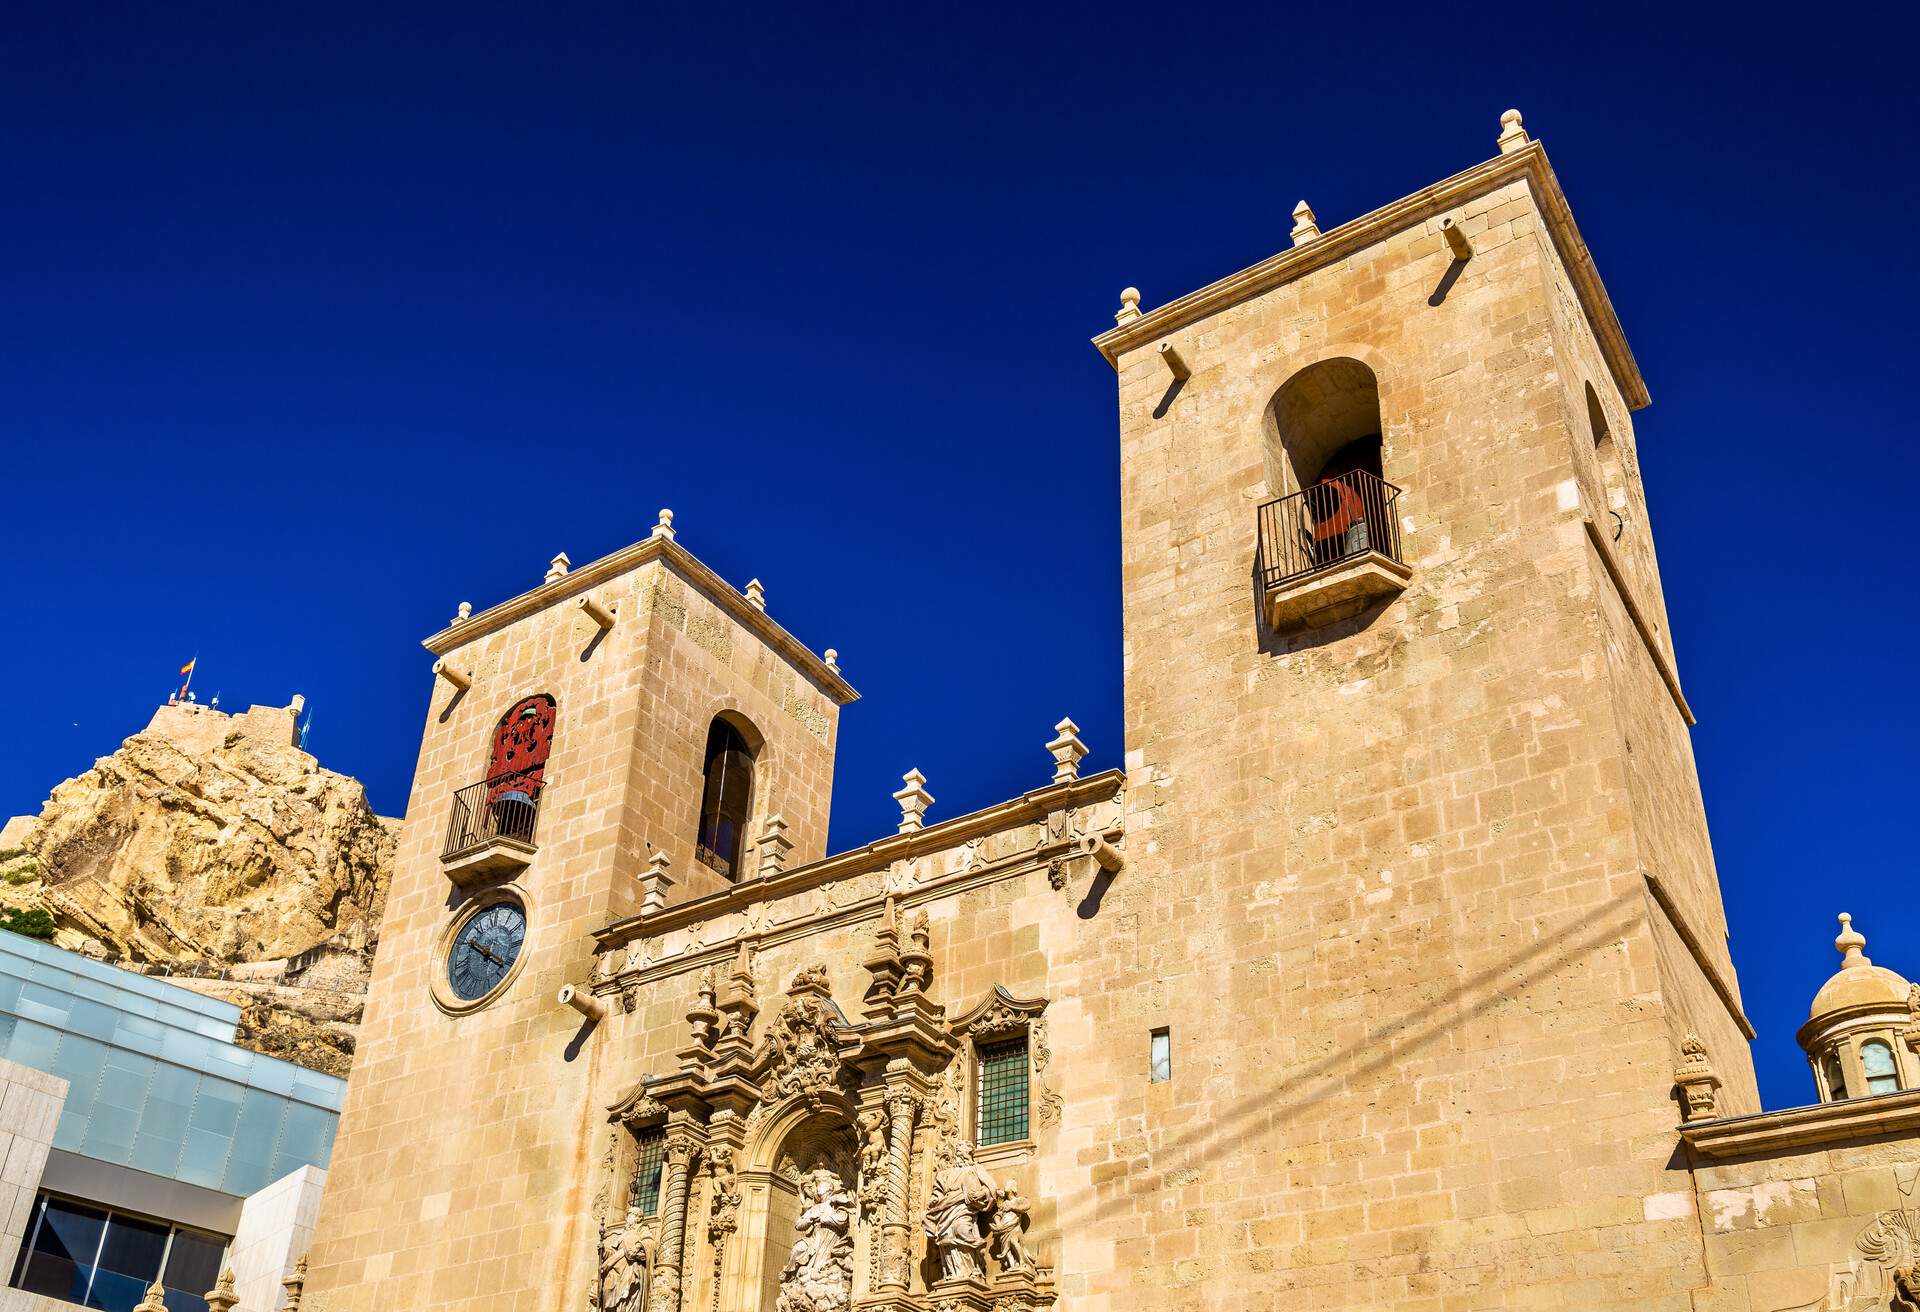 The Basilica of Santa Maria, the oldest active church in Alicante, Spain